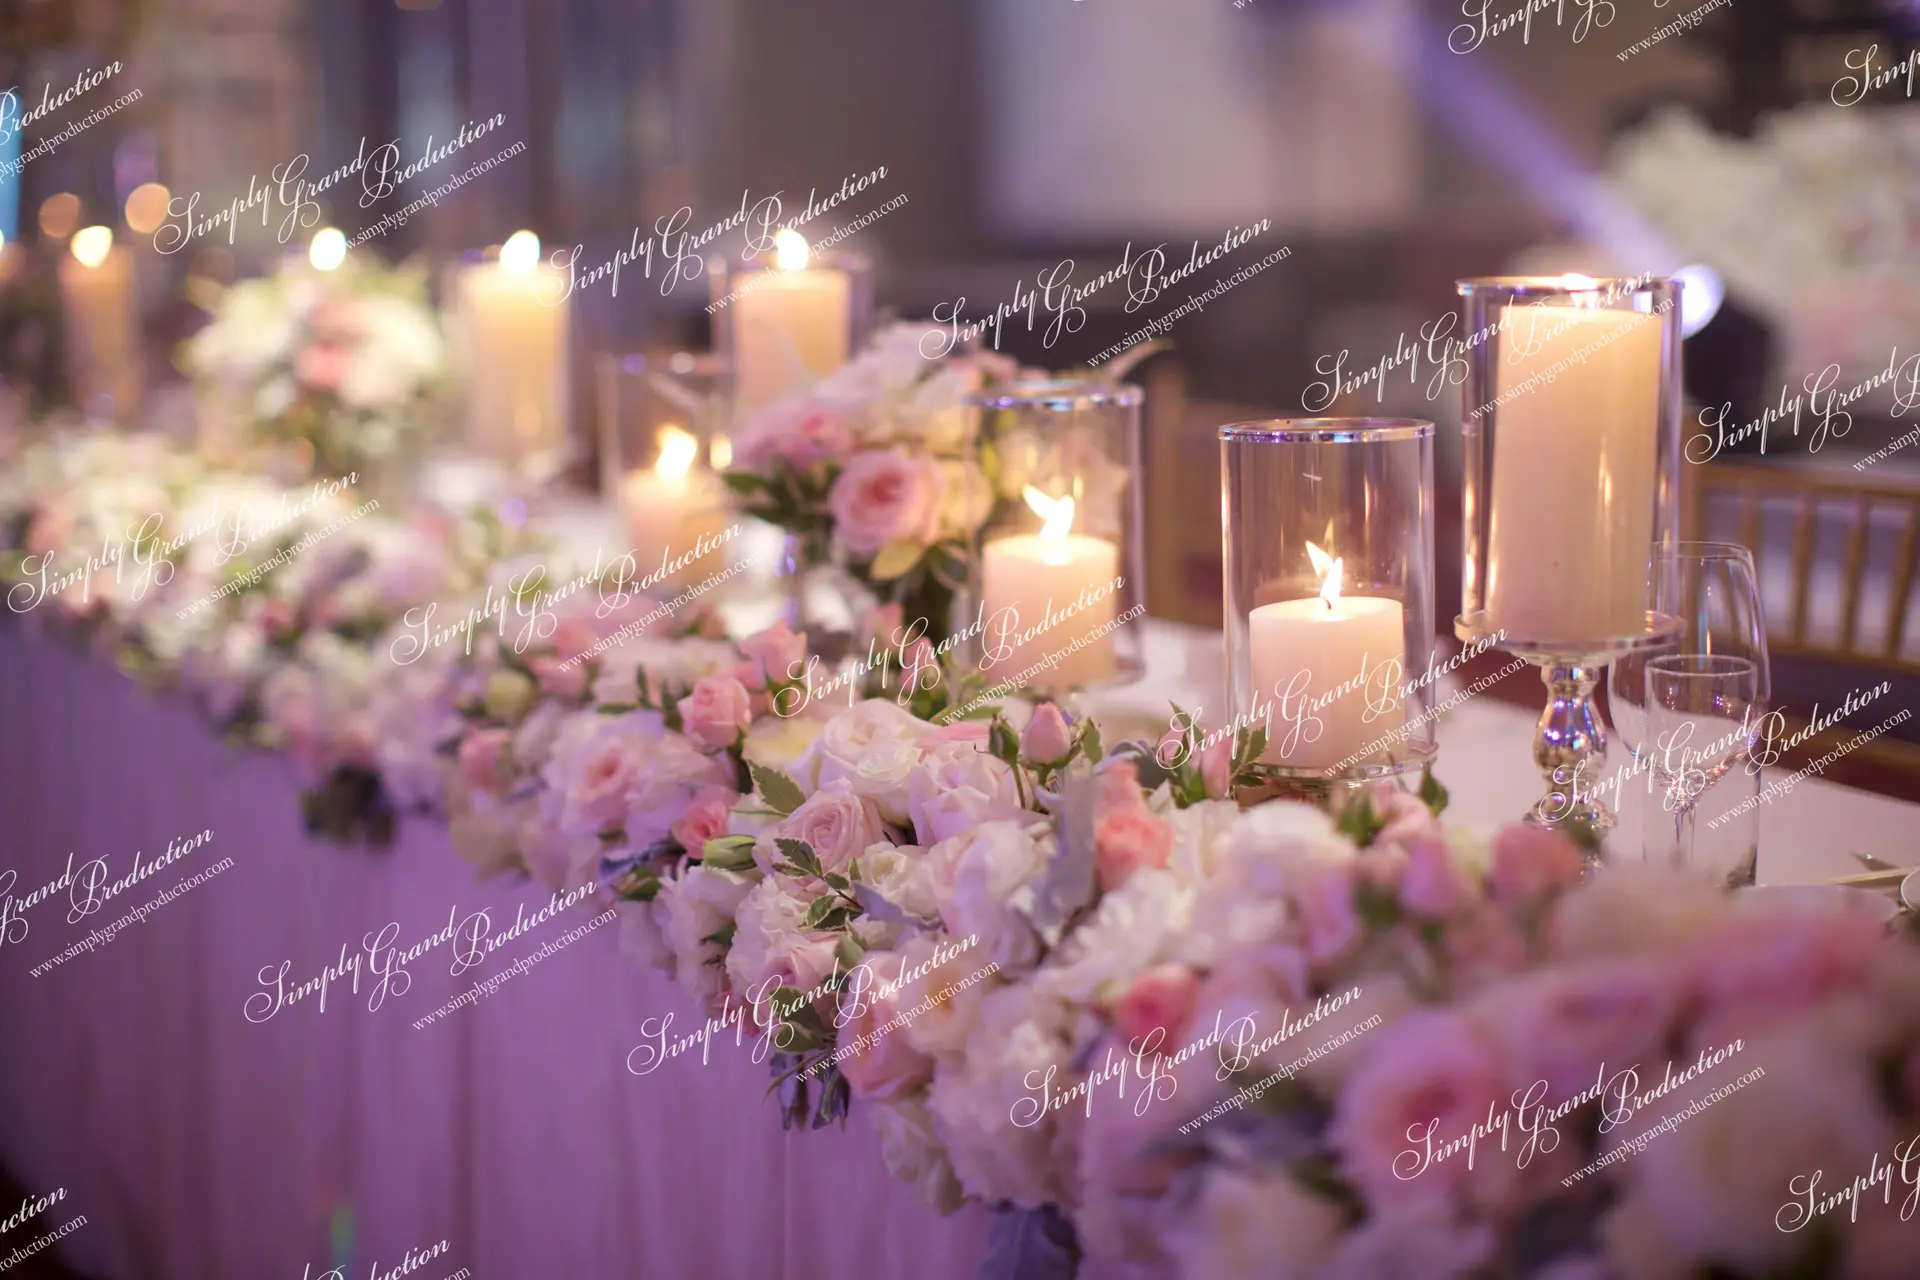 Simply_Grand_Production_wedding_deco_long_table_centerpiece_Grand_Hyatt_1_12_wm